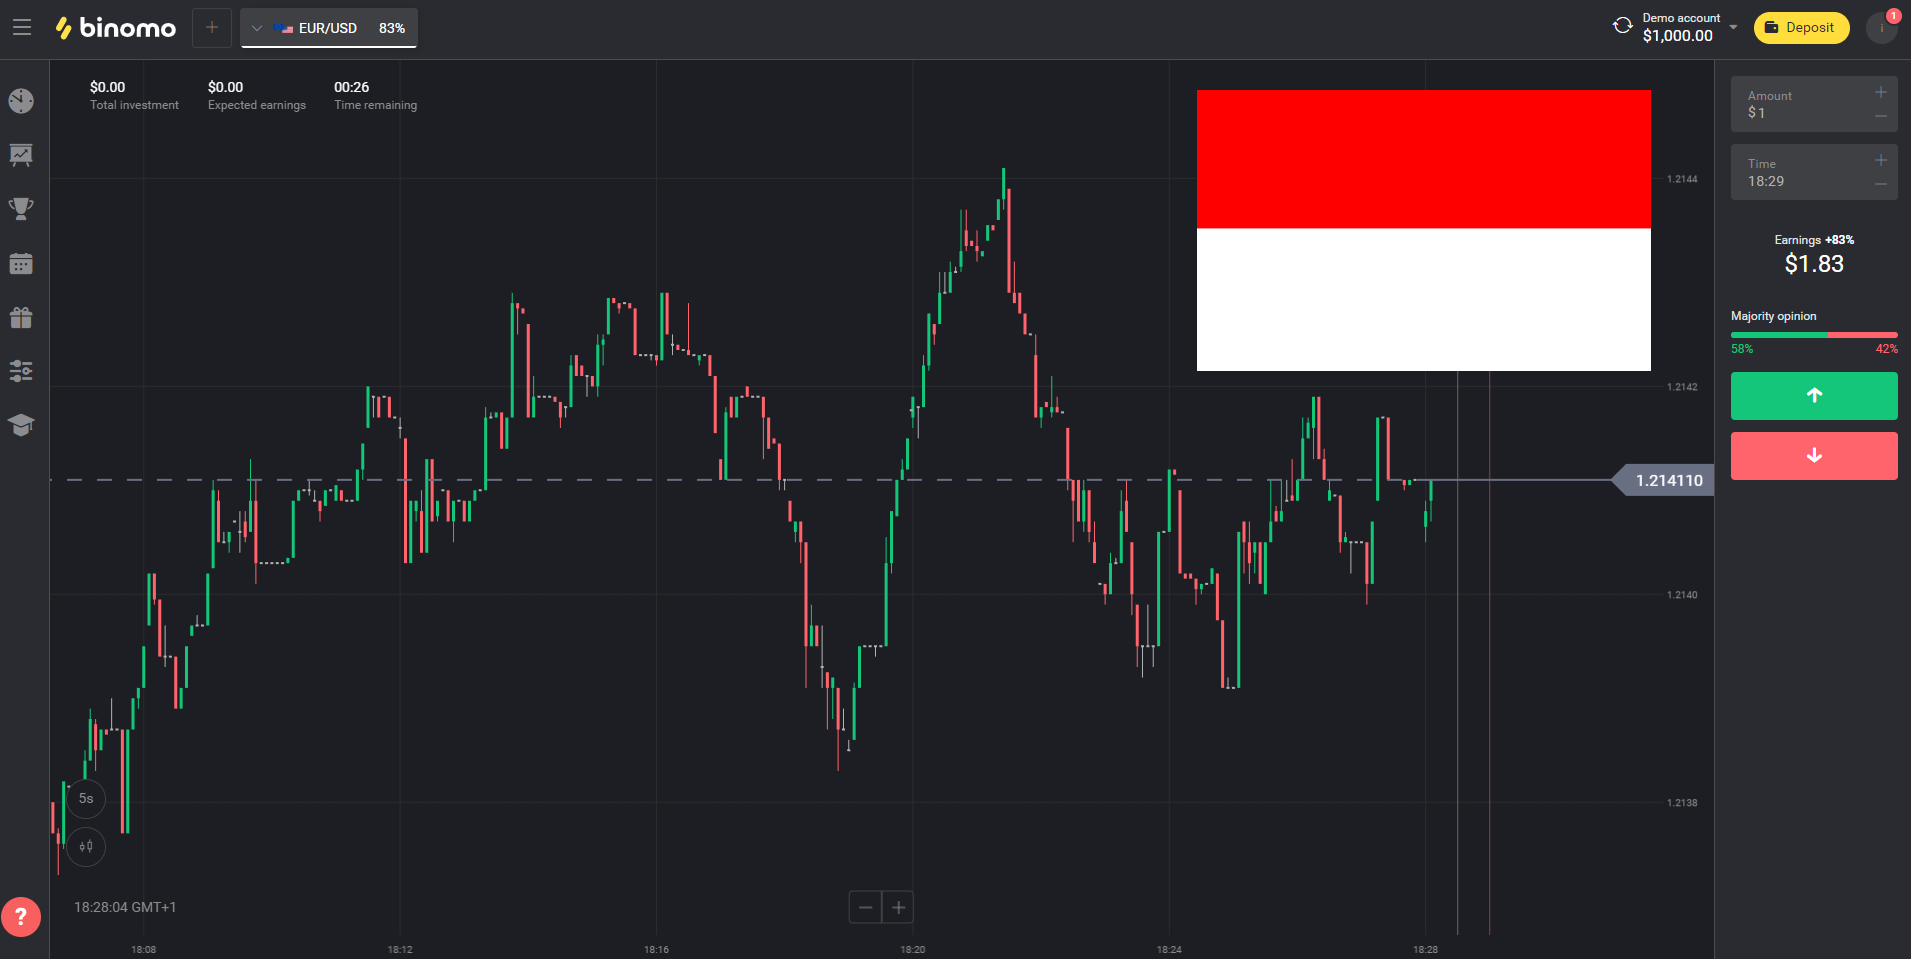 Binomo trading platform in Indonesia